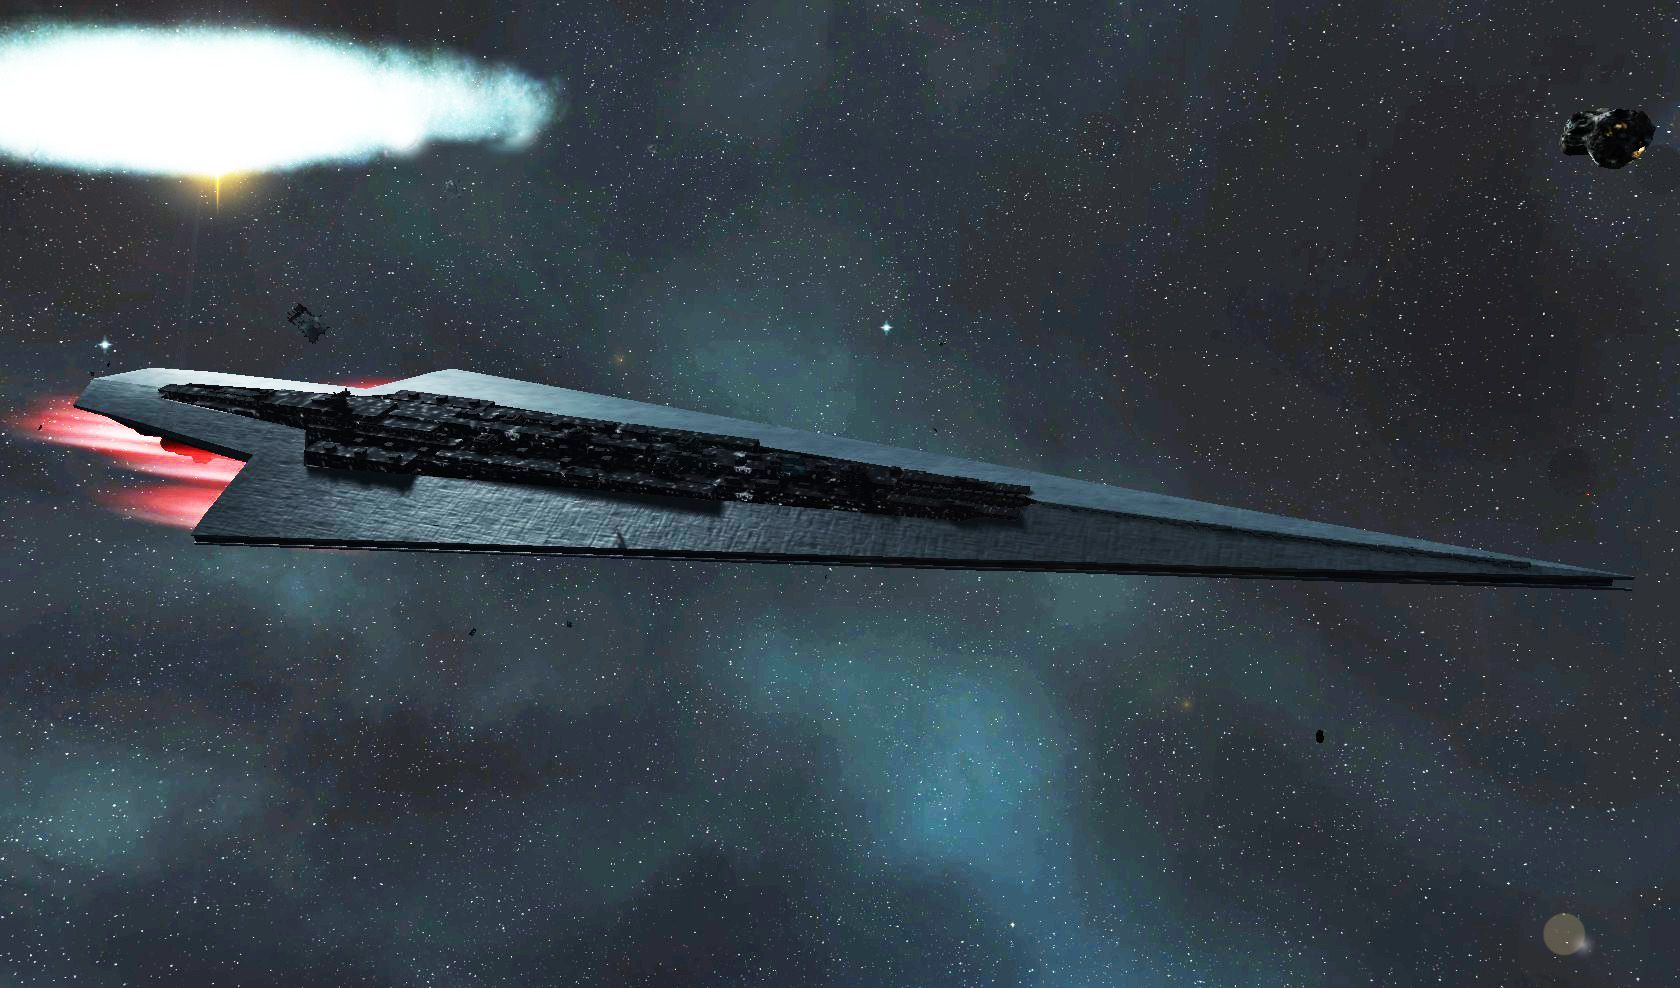 Executor Class Star Destroyer. Star Wars Ships, Star Wars Spaceships, Star Wars Movies Posters